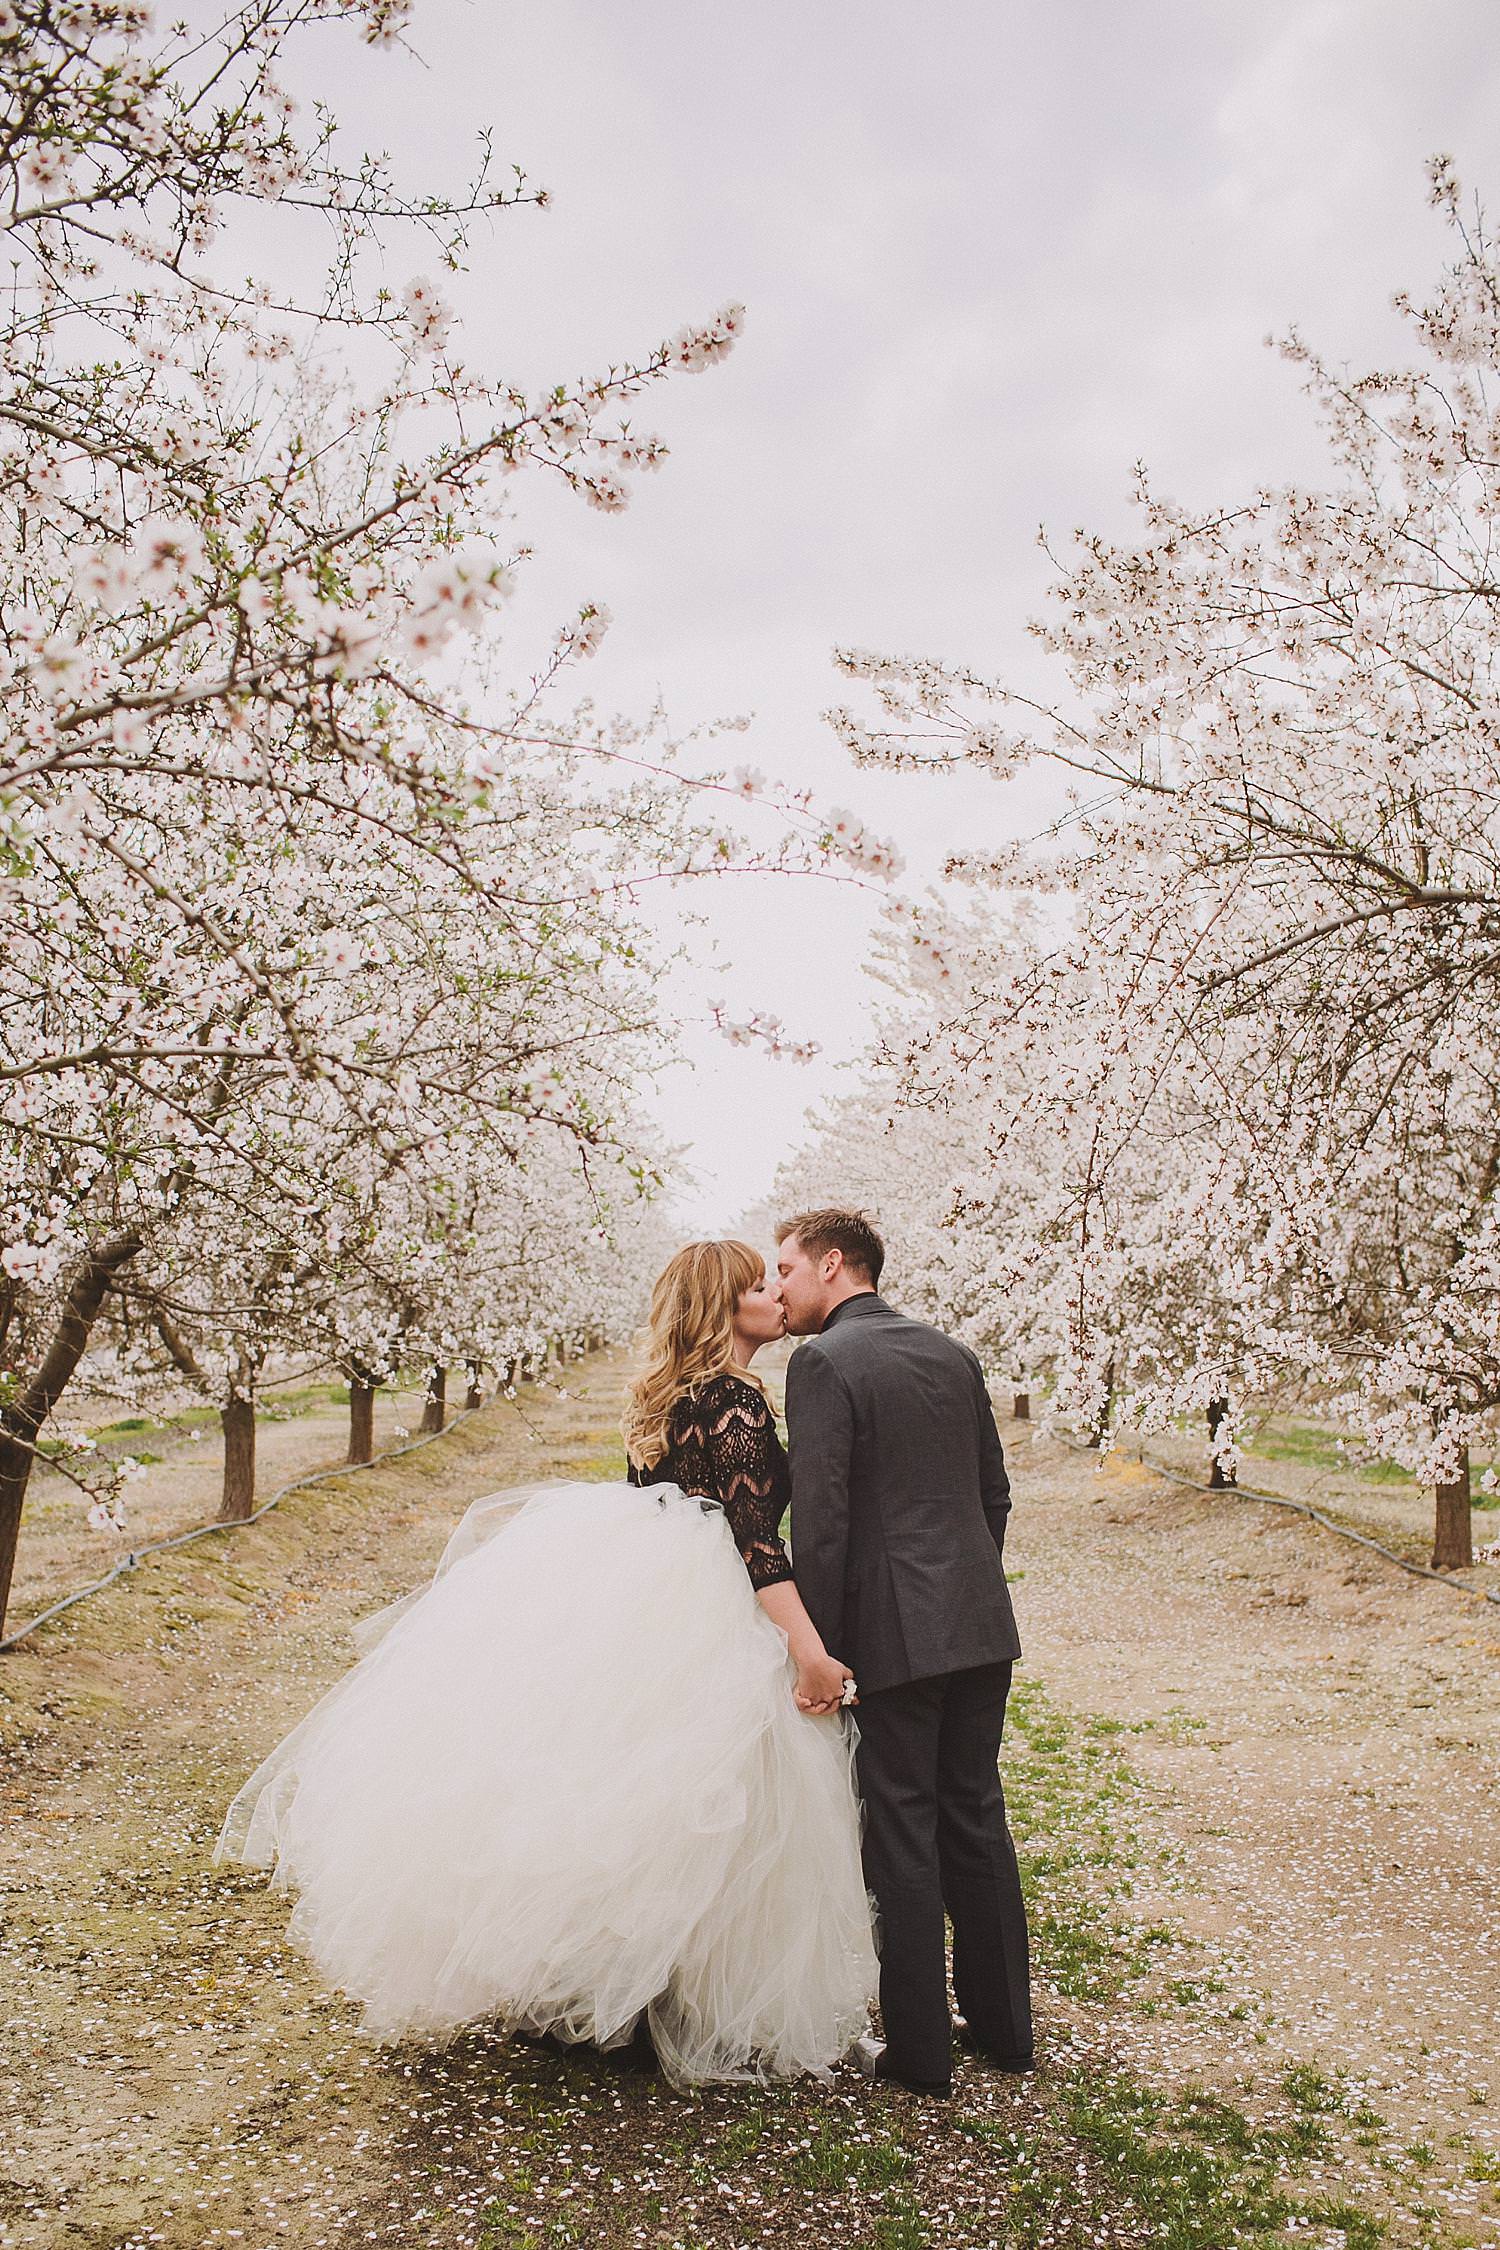 Almond orchard wedding photo ideas